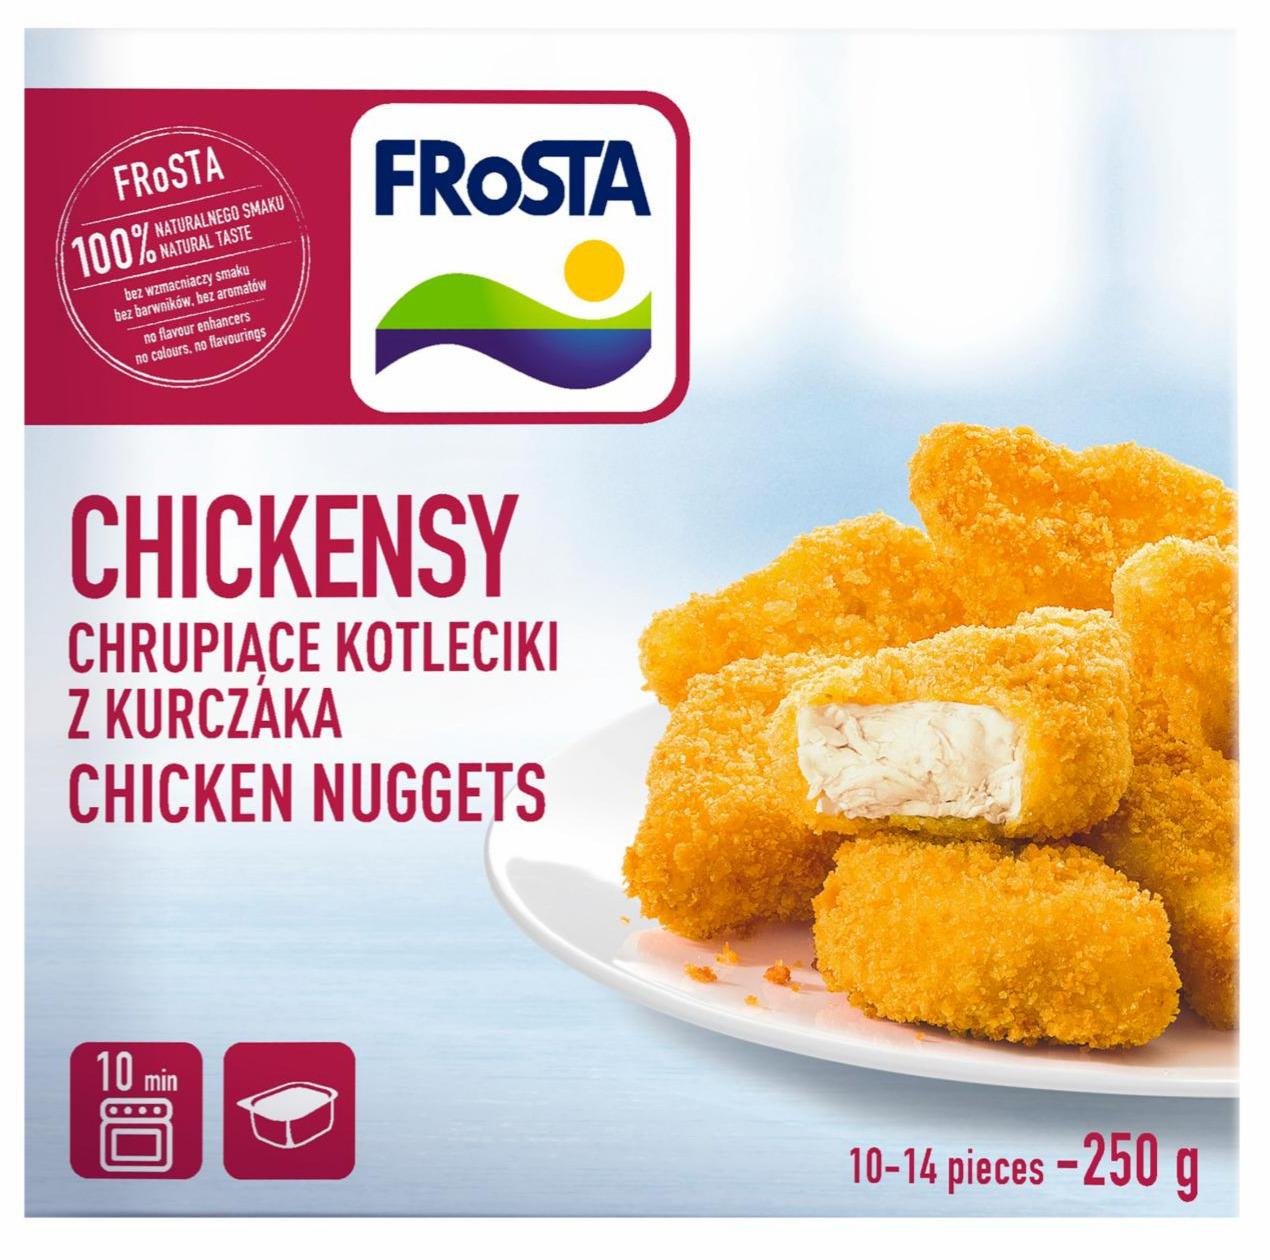 Zdjęcia - FRoSTA Chickensy Chrupiące kotleciki z kurczaka 250 g + sos 25 ml